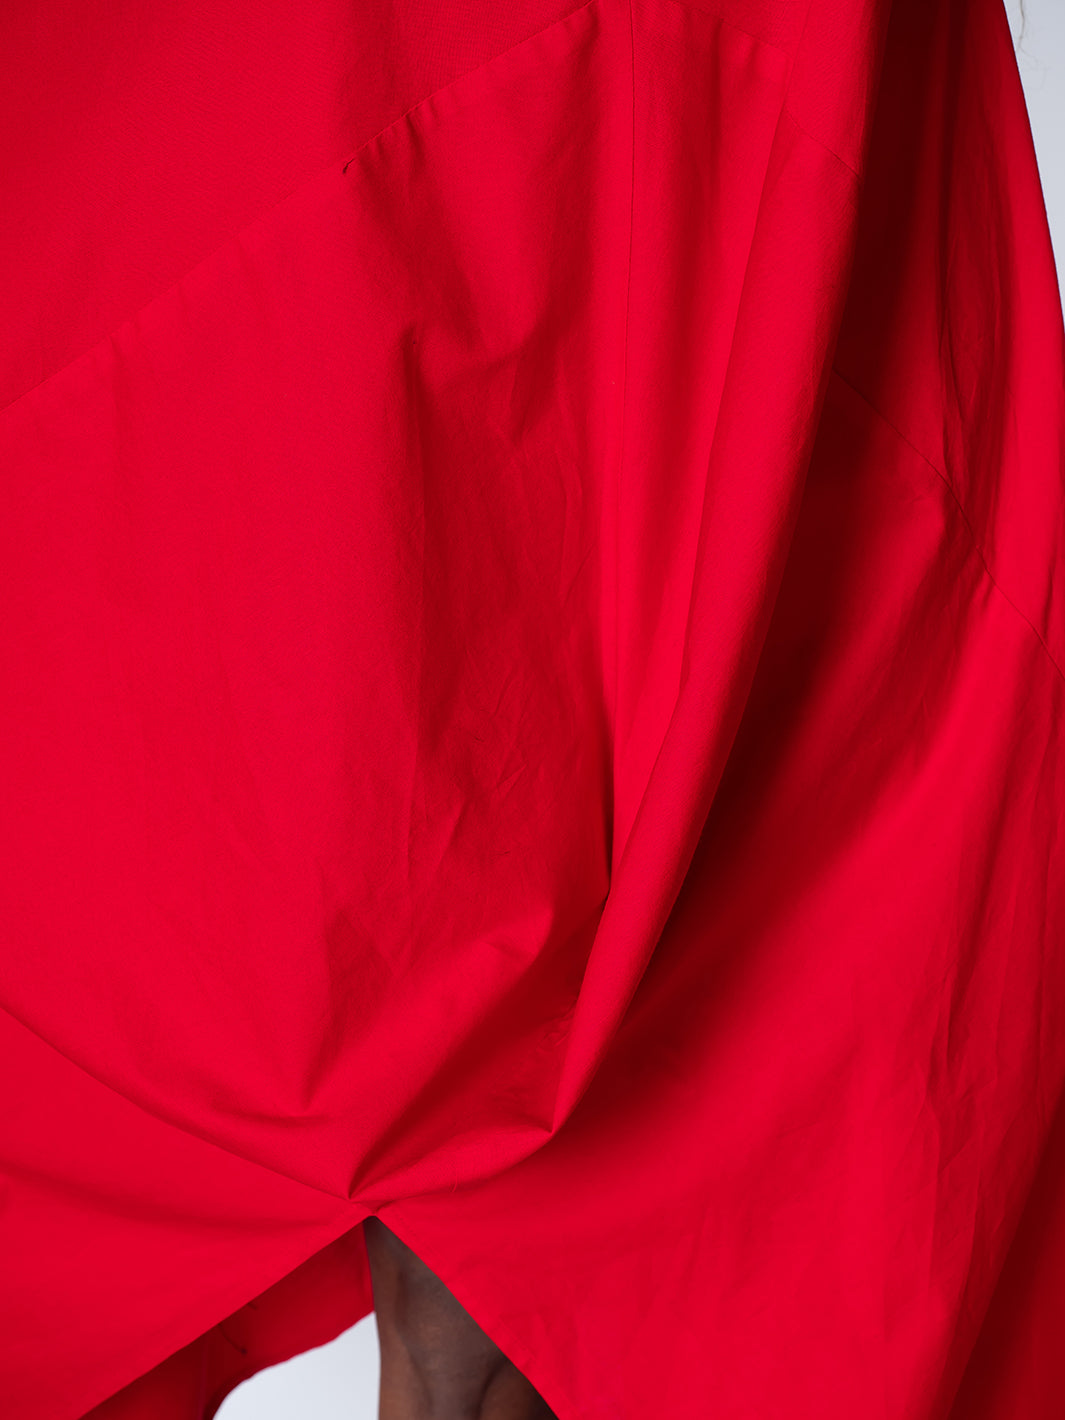 Asymmetric Sleeveless Red Dress